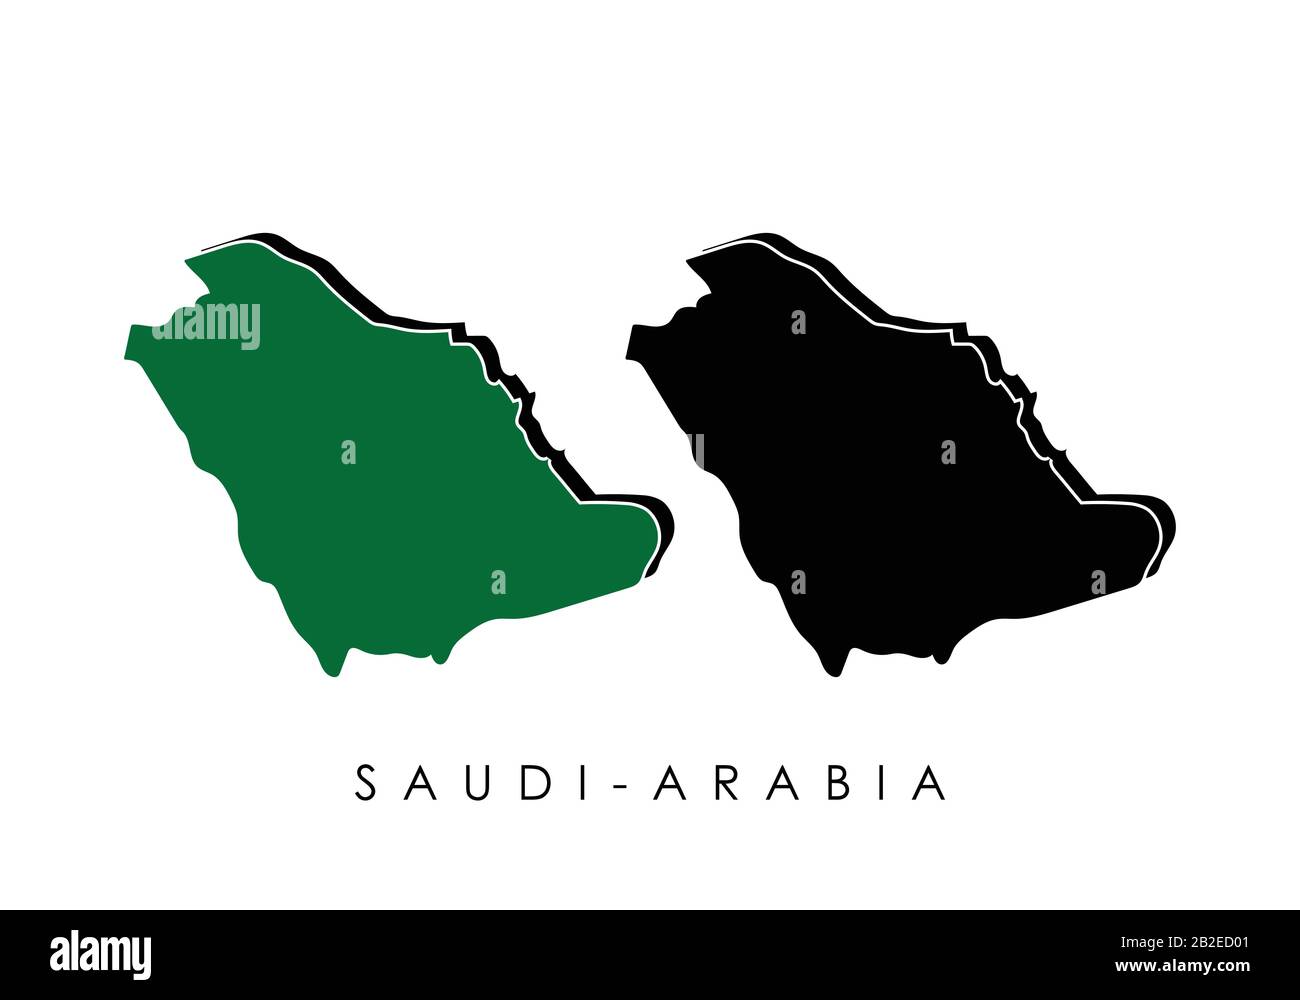 Map of Saudi Arabia Vector Design Template, Editable Stock Vector Image ...